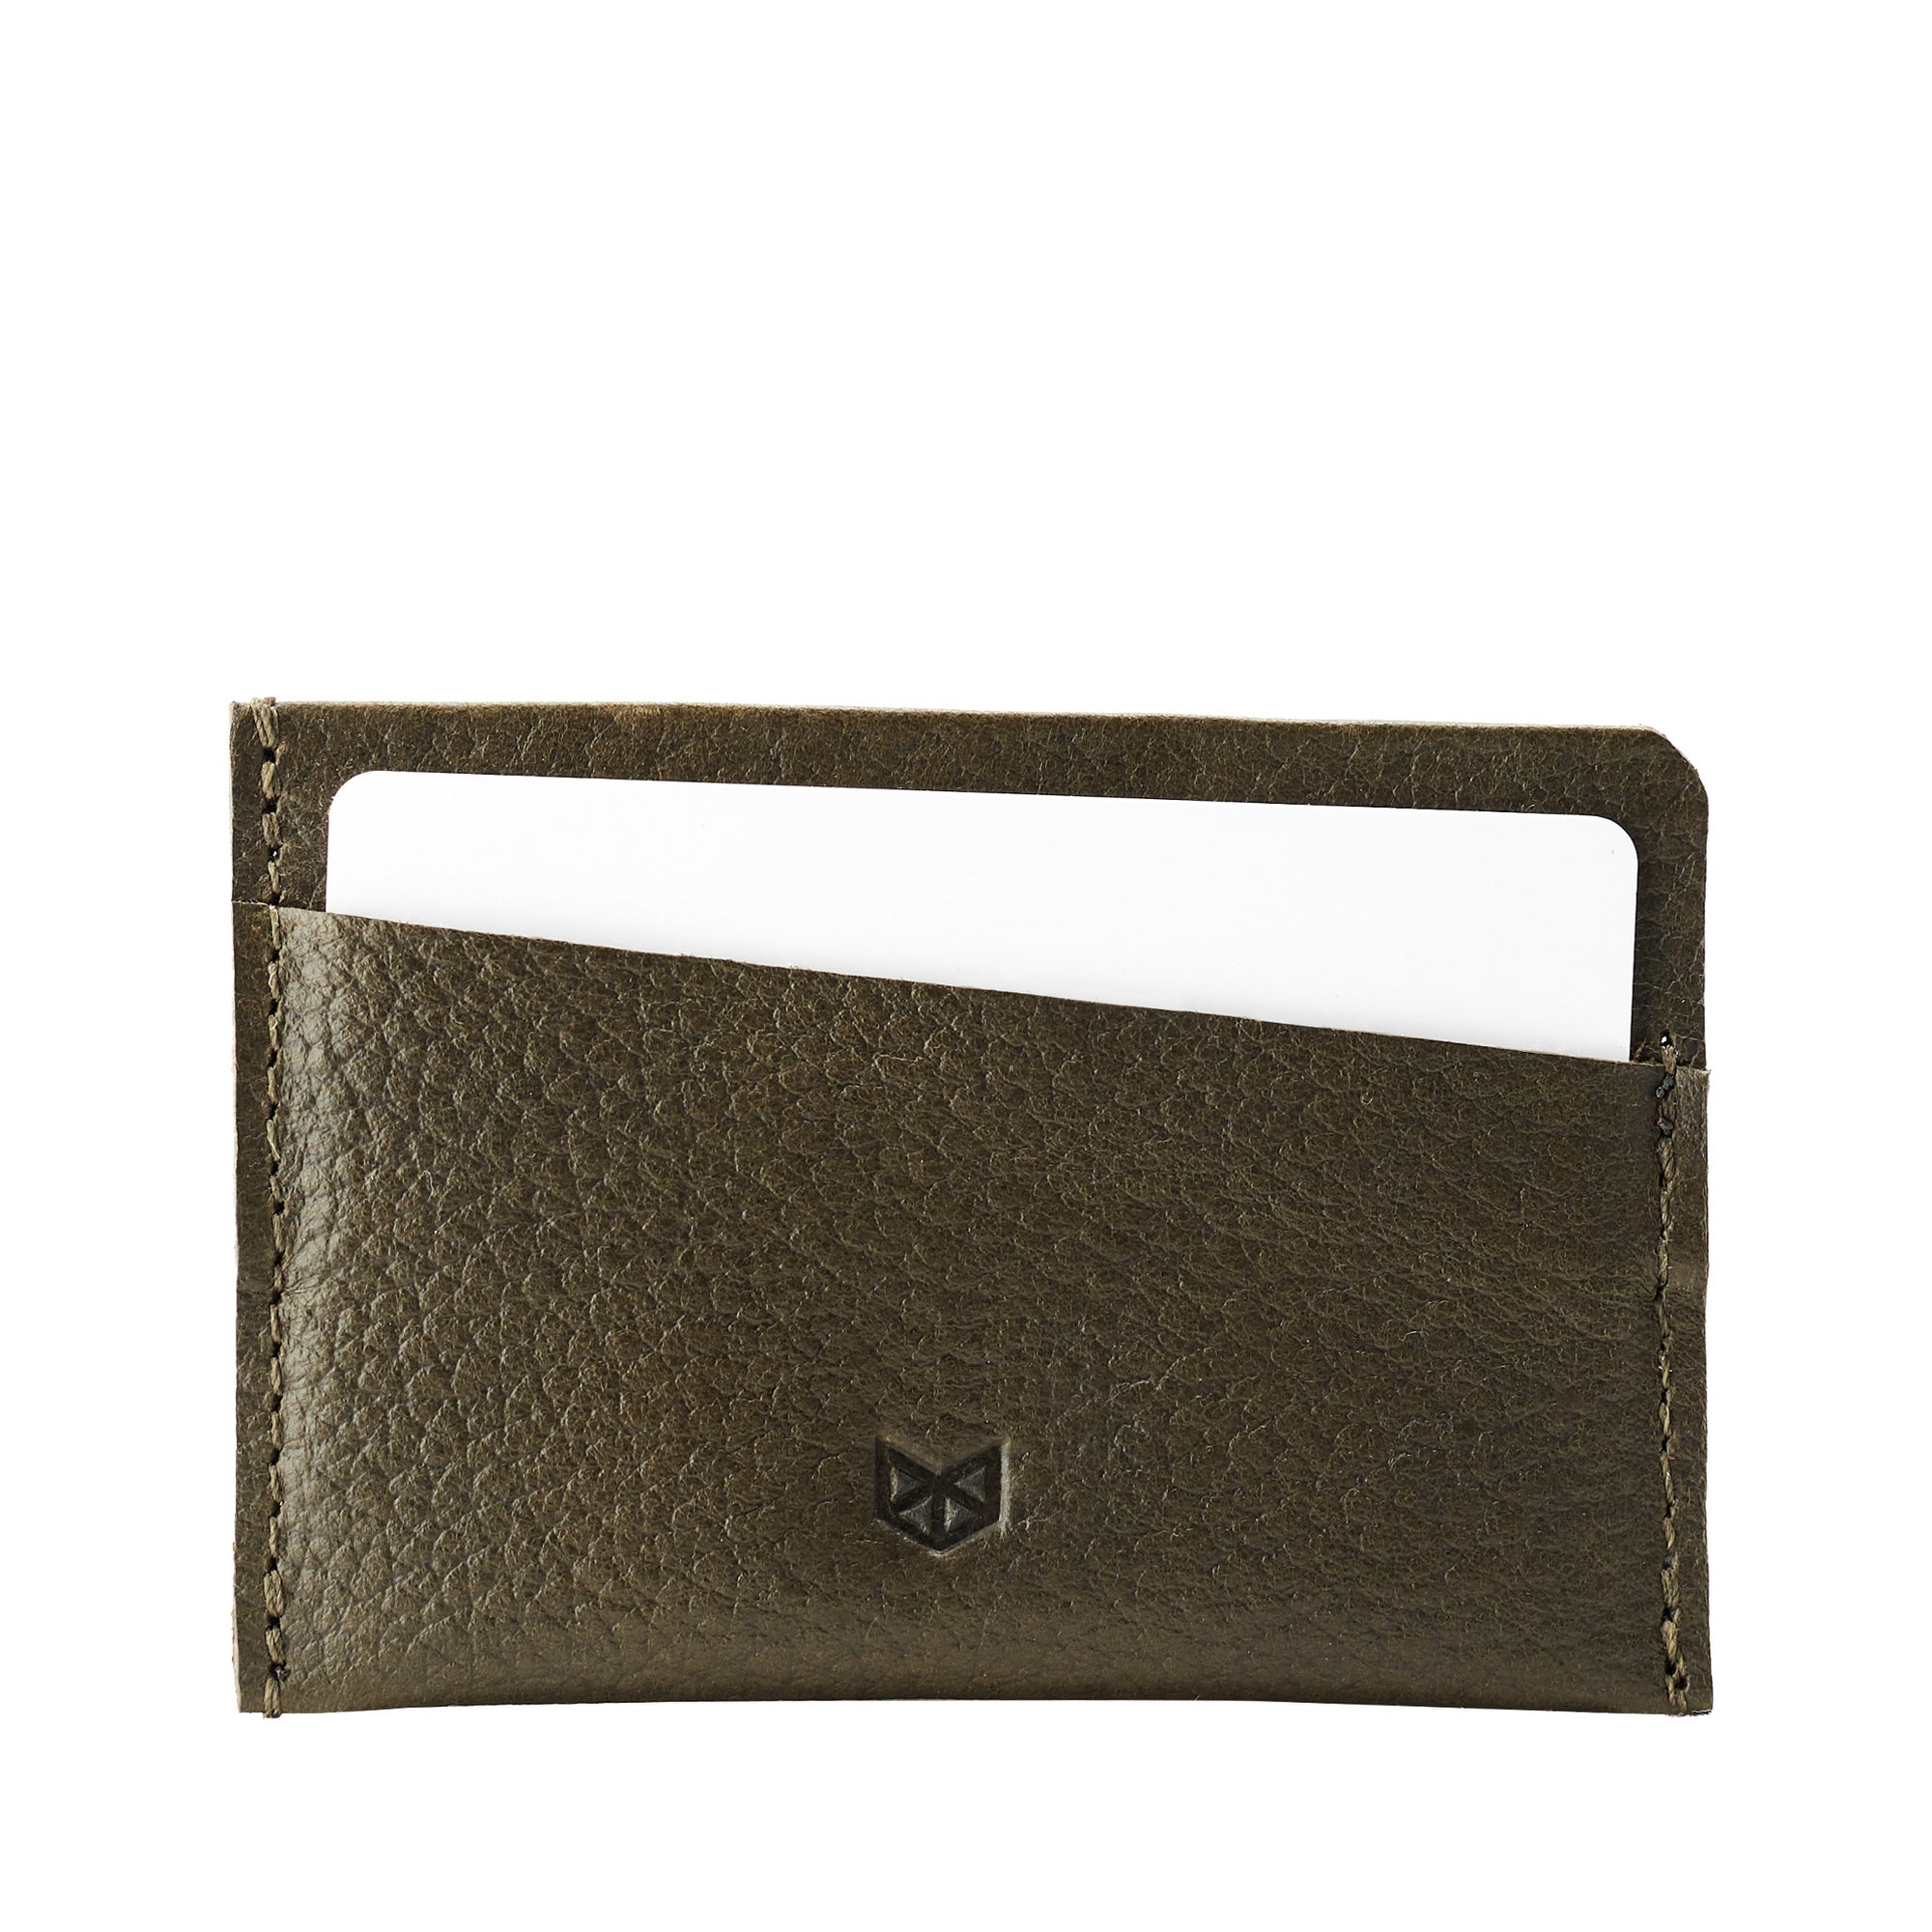 Slim green leather card holder. Gifts for men, leather tan card holder, handmade accessories, minimalist designer cards wallet